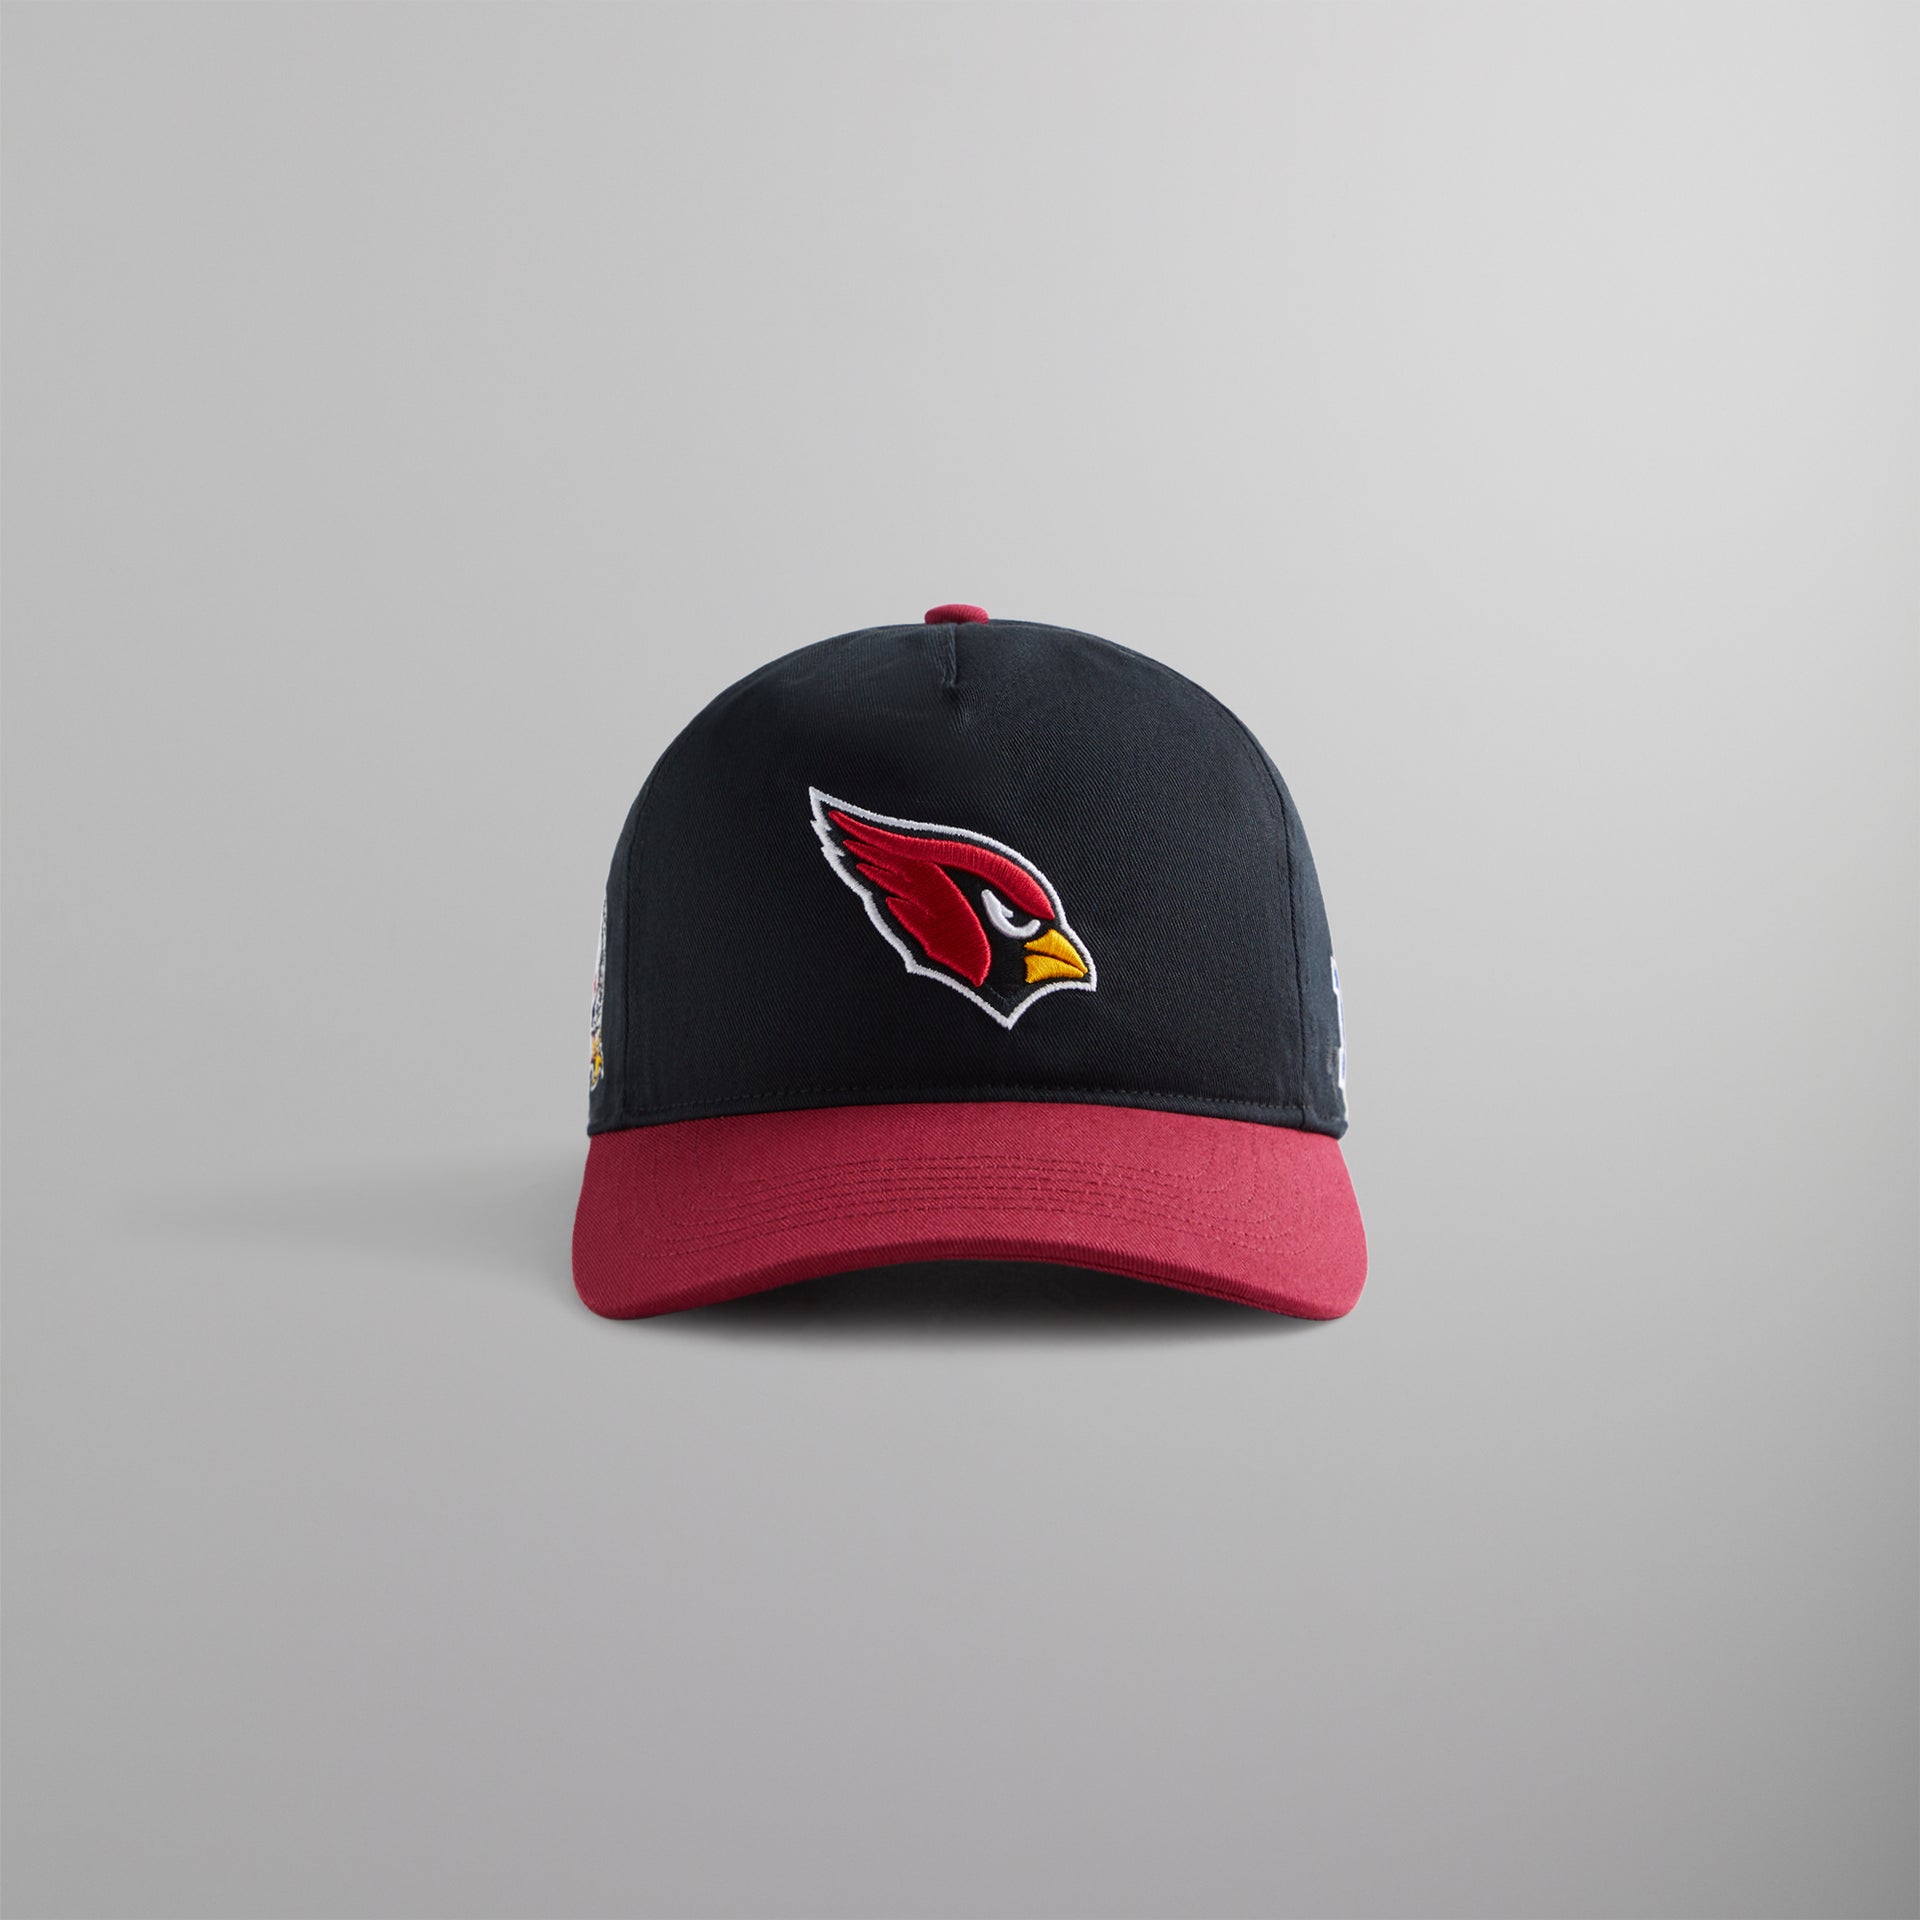 UrlfreezeShops for the NFL: Cardinals '47 Hitch Snapback - Black